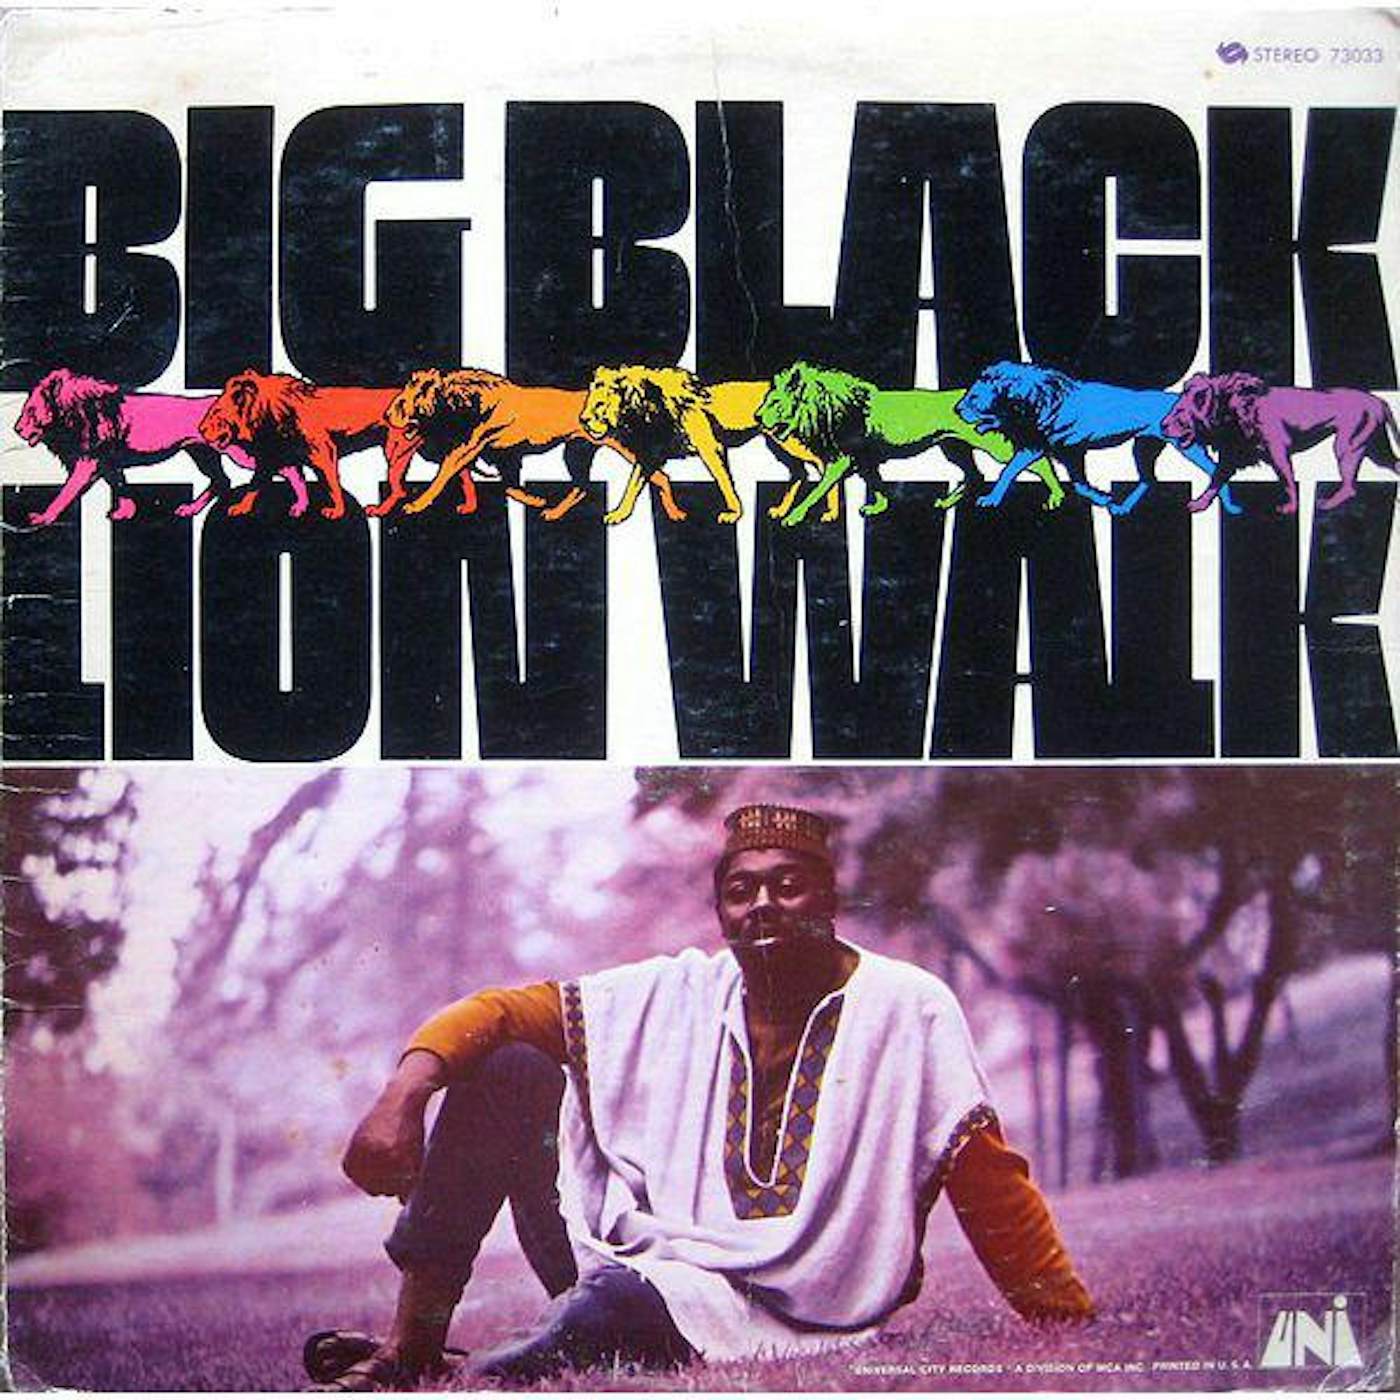 Big Black Lion Walk Vinyl Record